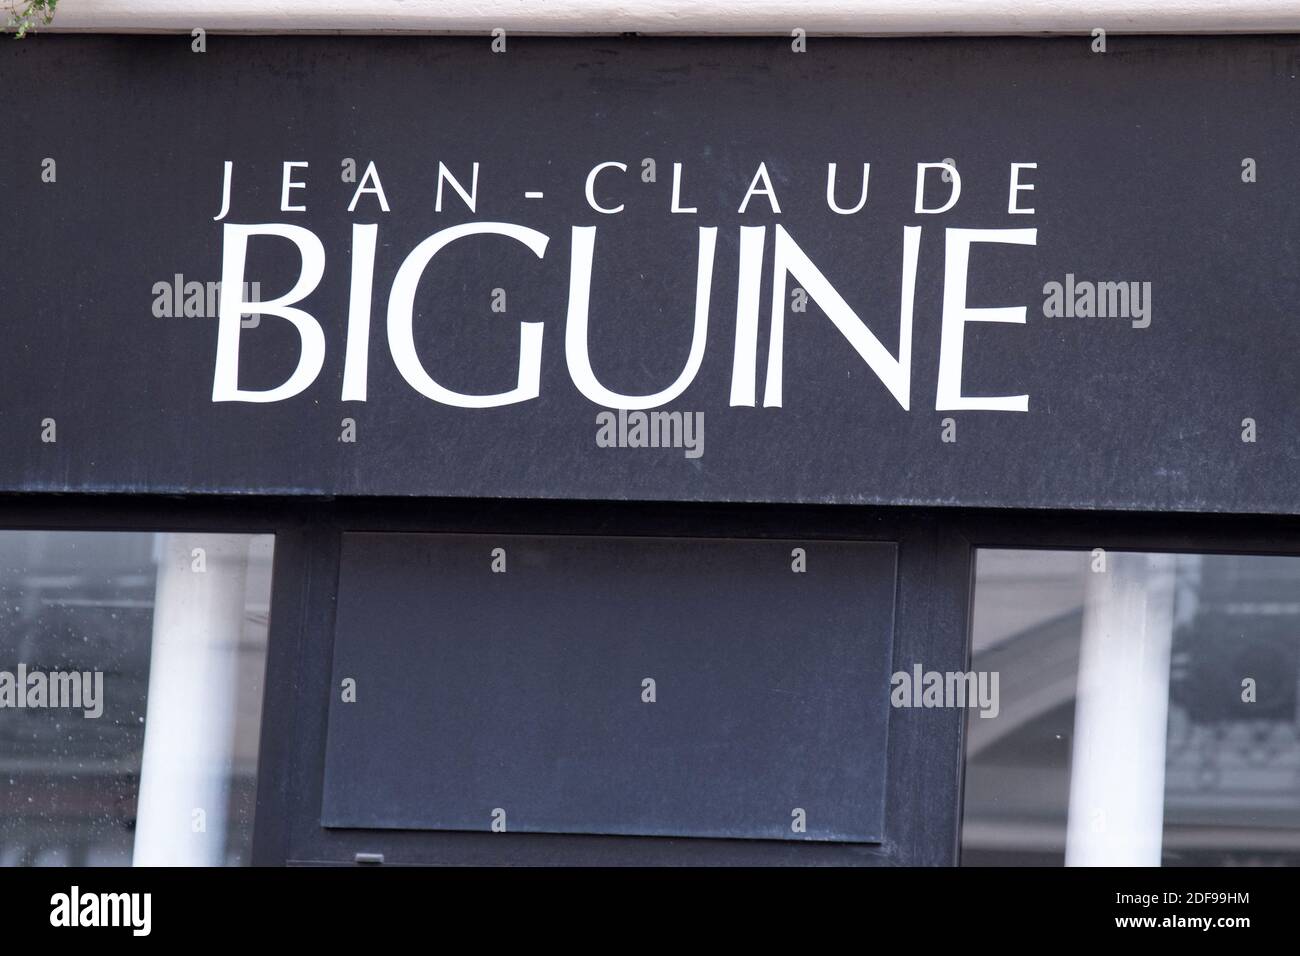 A shop sign of Jean-Claude BIGUINE in Paris, on April 17, 2020,  France.Photo by David Niviere/ABACAPRESS.COM Stock Photo - Alamy